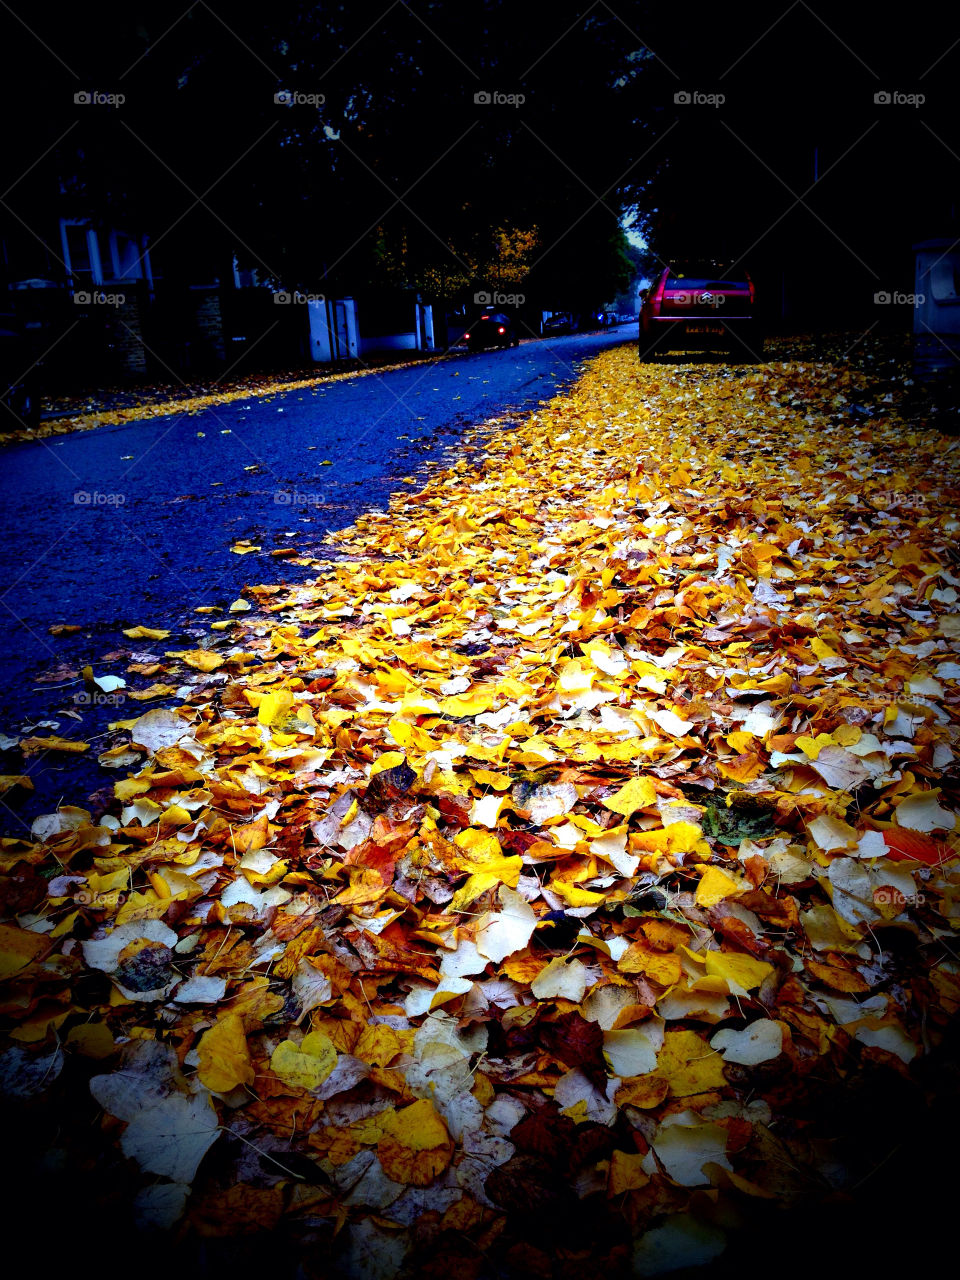 mission5 yalia london street golden autumn leaves by kikicheeky